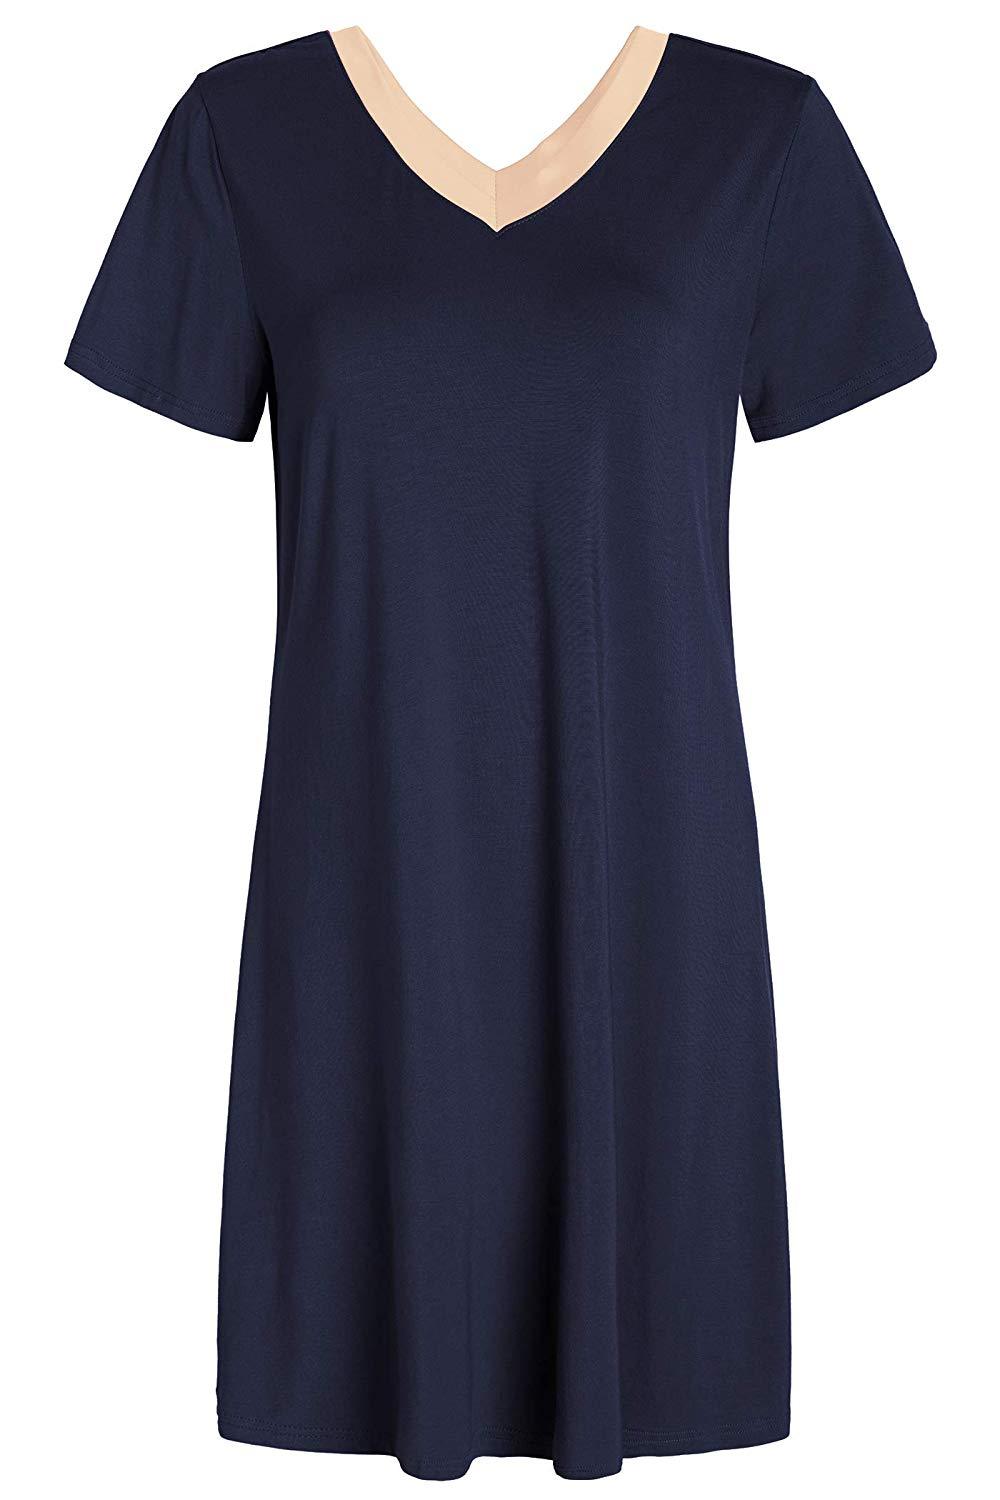 Women's V-Neck Bamboo Sleep Night Shirt Dress Jersey Nightgown - Latuza